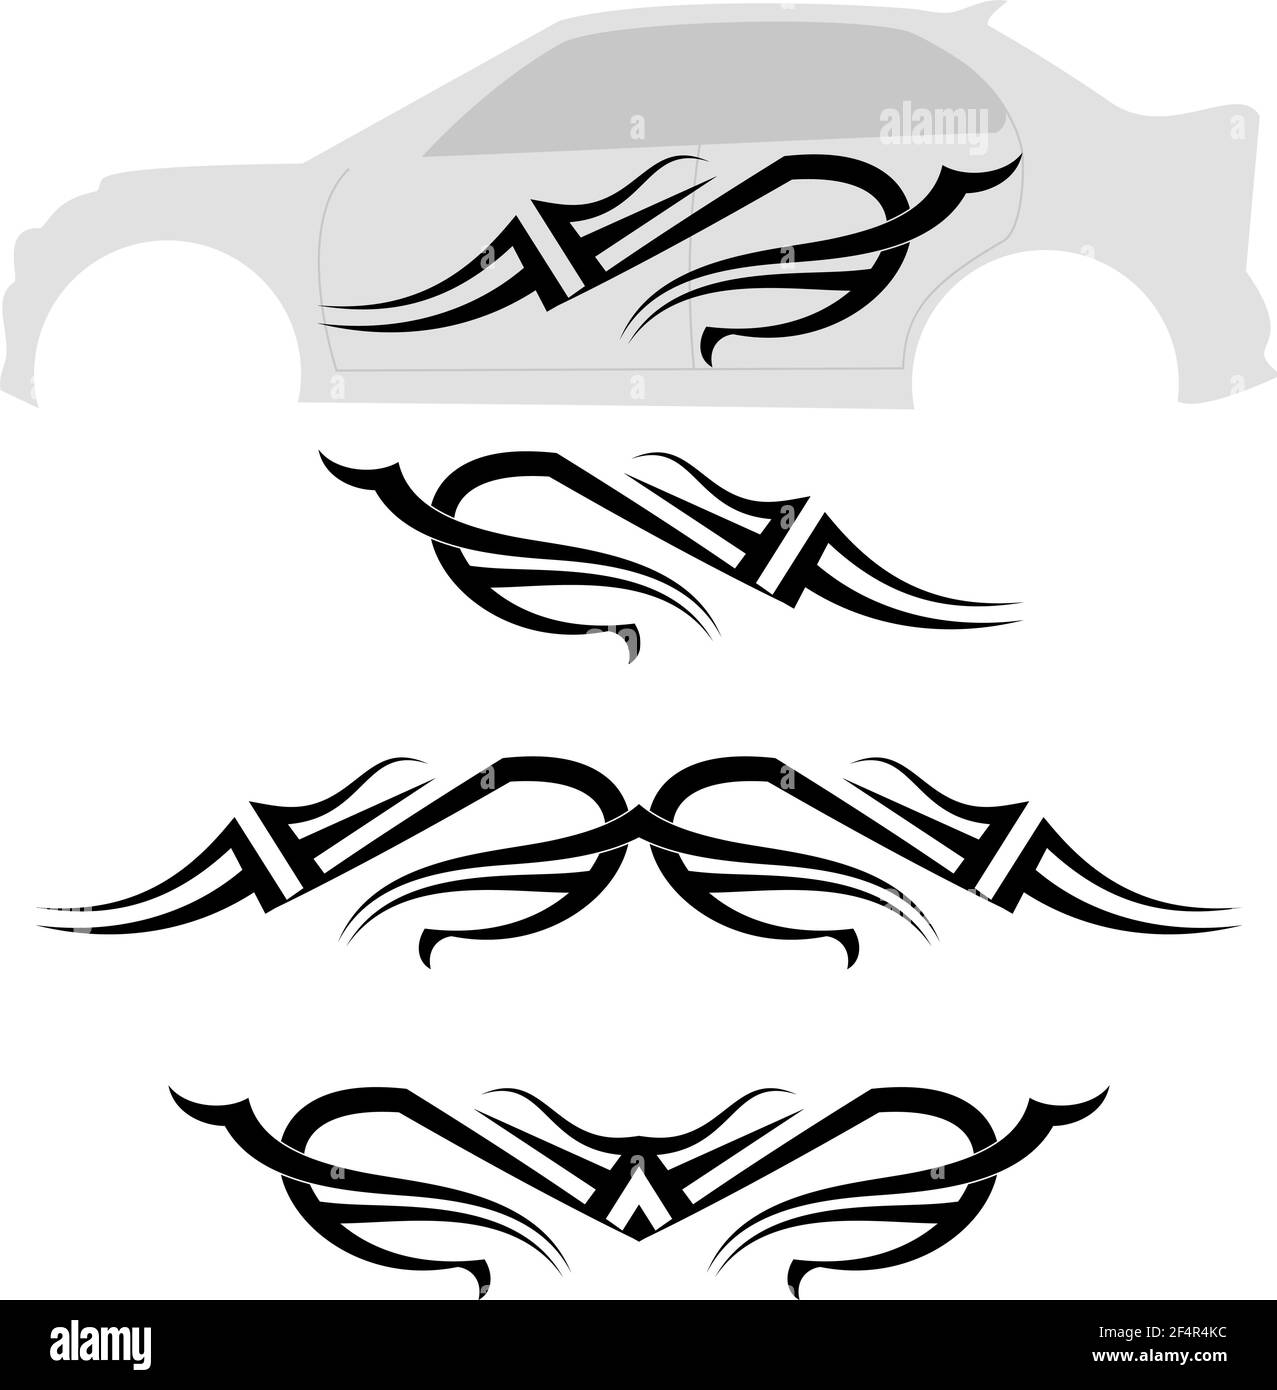 tribal car designs